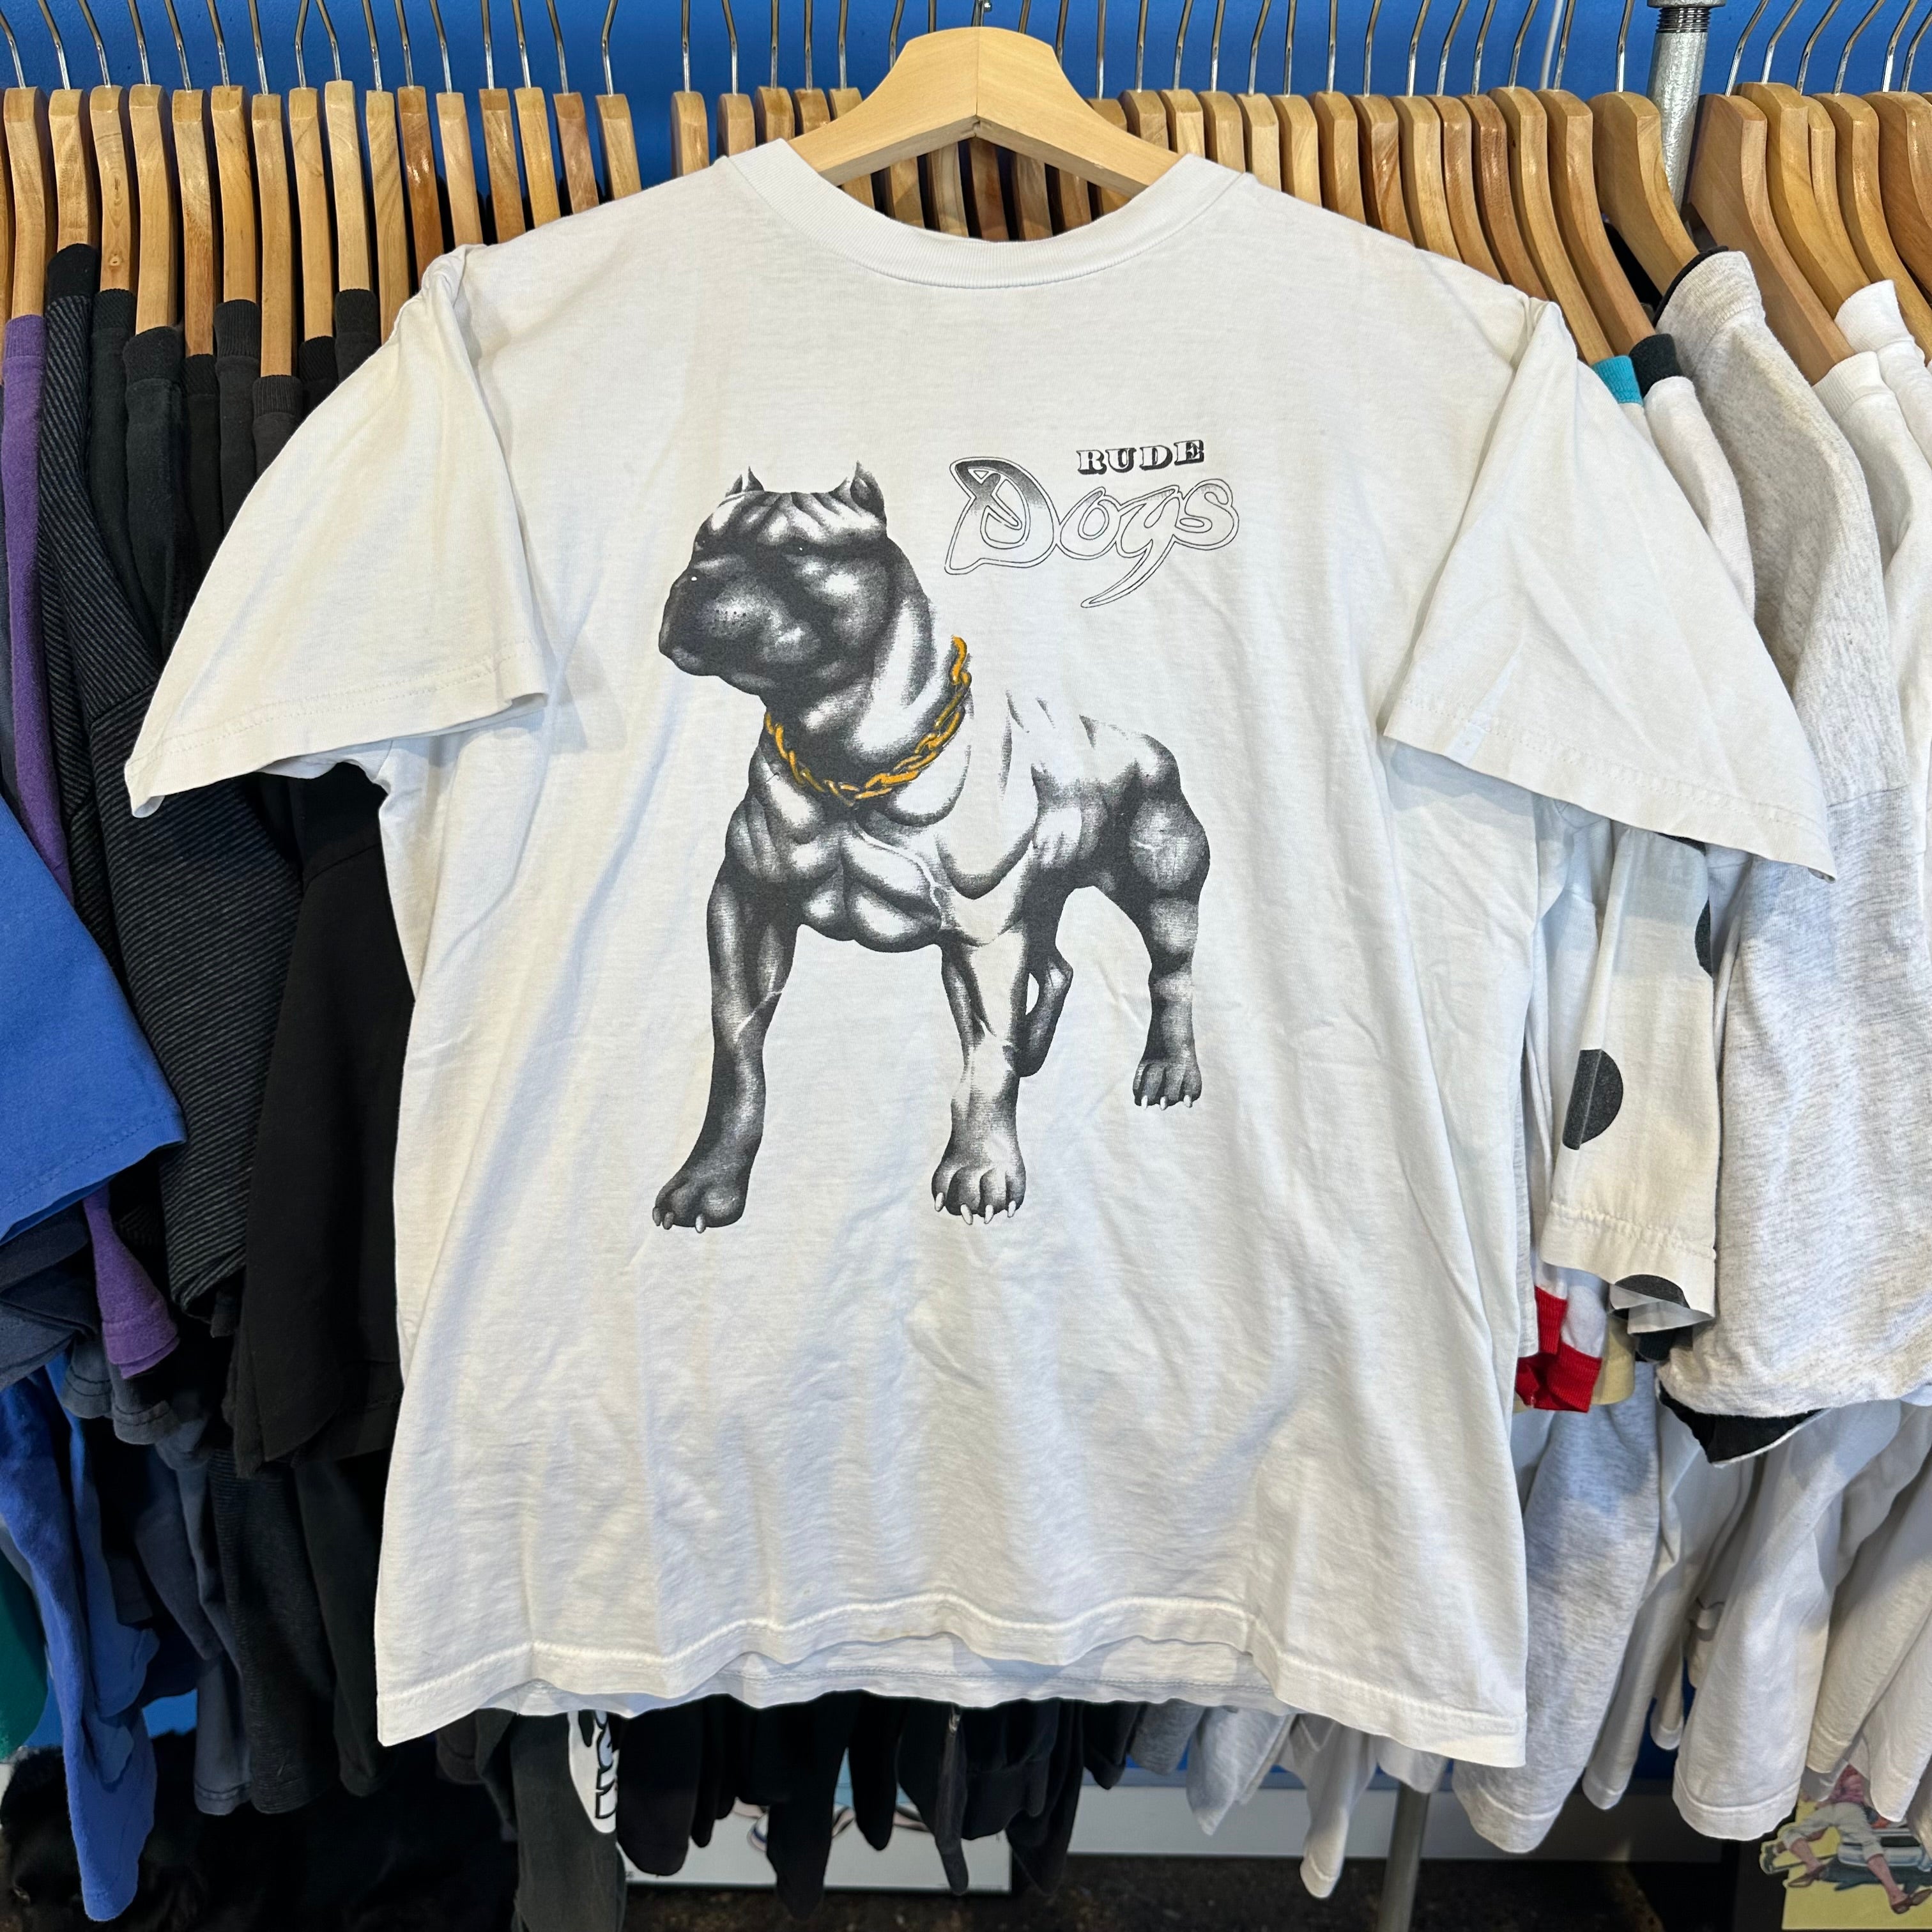 Rude Dogs T-Shirt